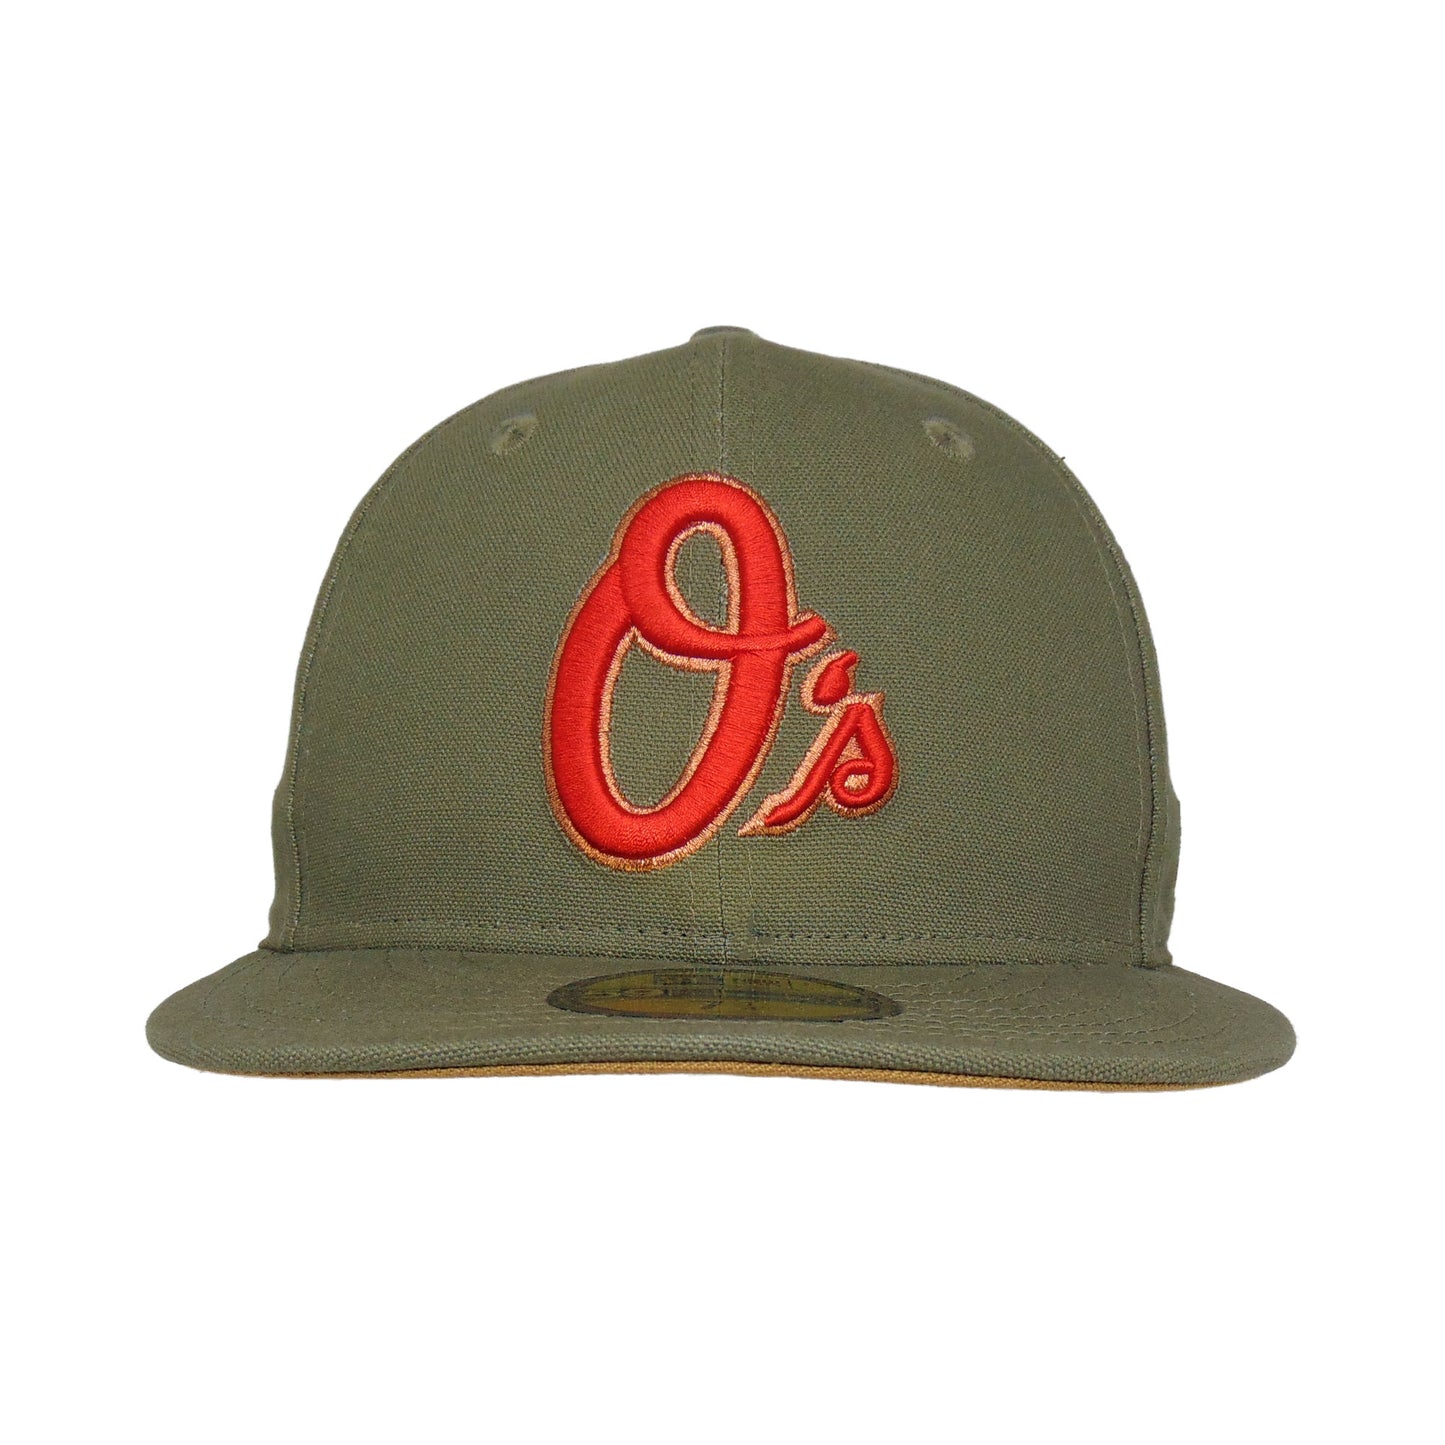 Baltimore Orioles New Era 59FIFTY Cap Olive O's